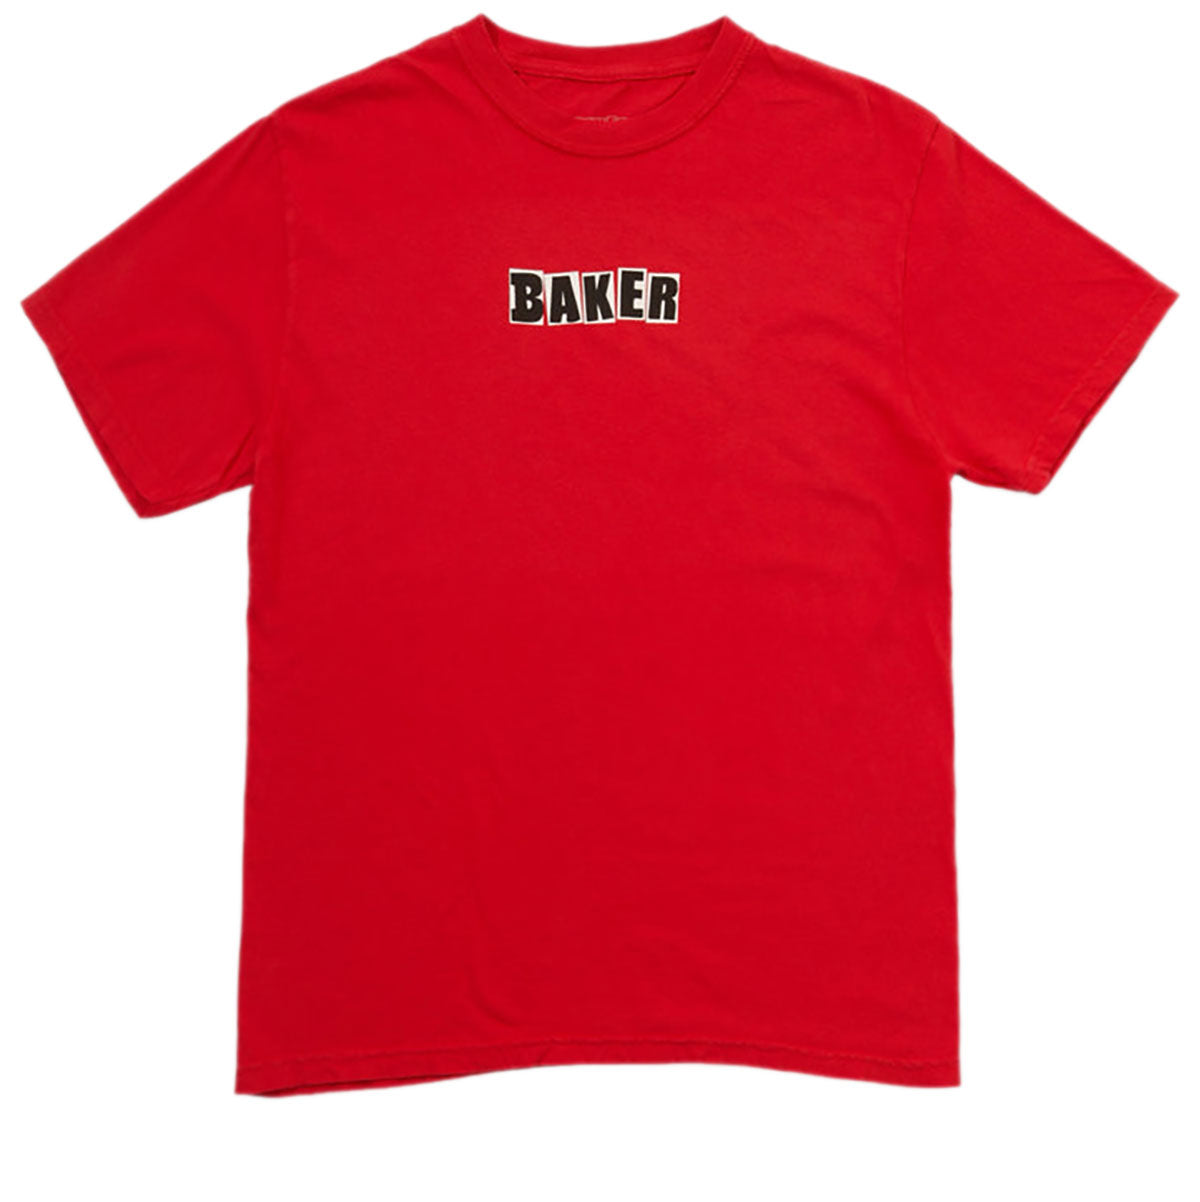 Baker Brand Logo T-Shirt - Red Wash image 1